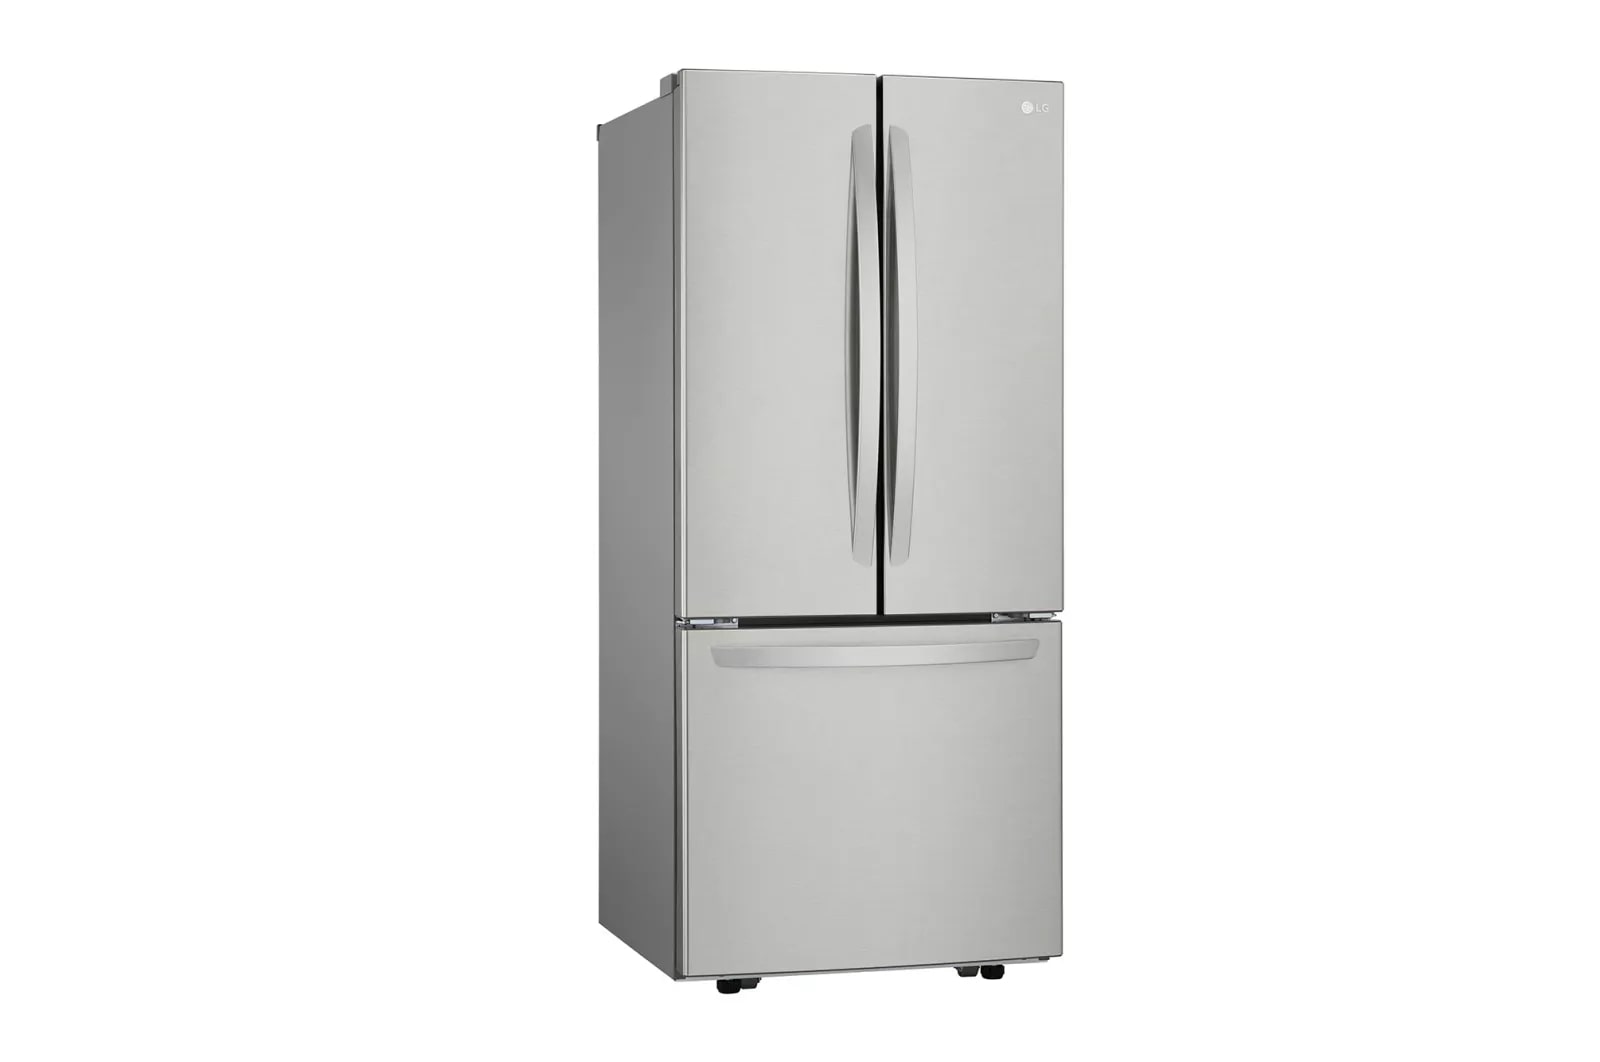 Lg 22 cu. ft. French Door Refrigerator